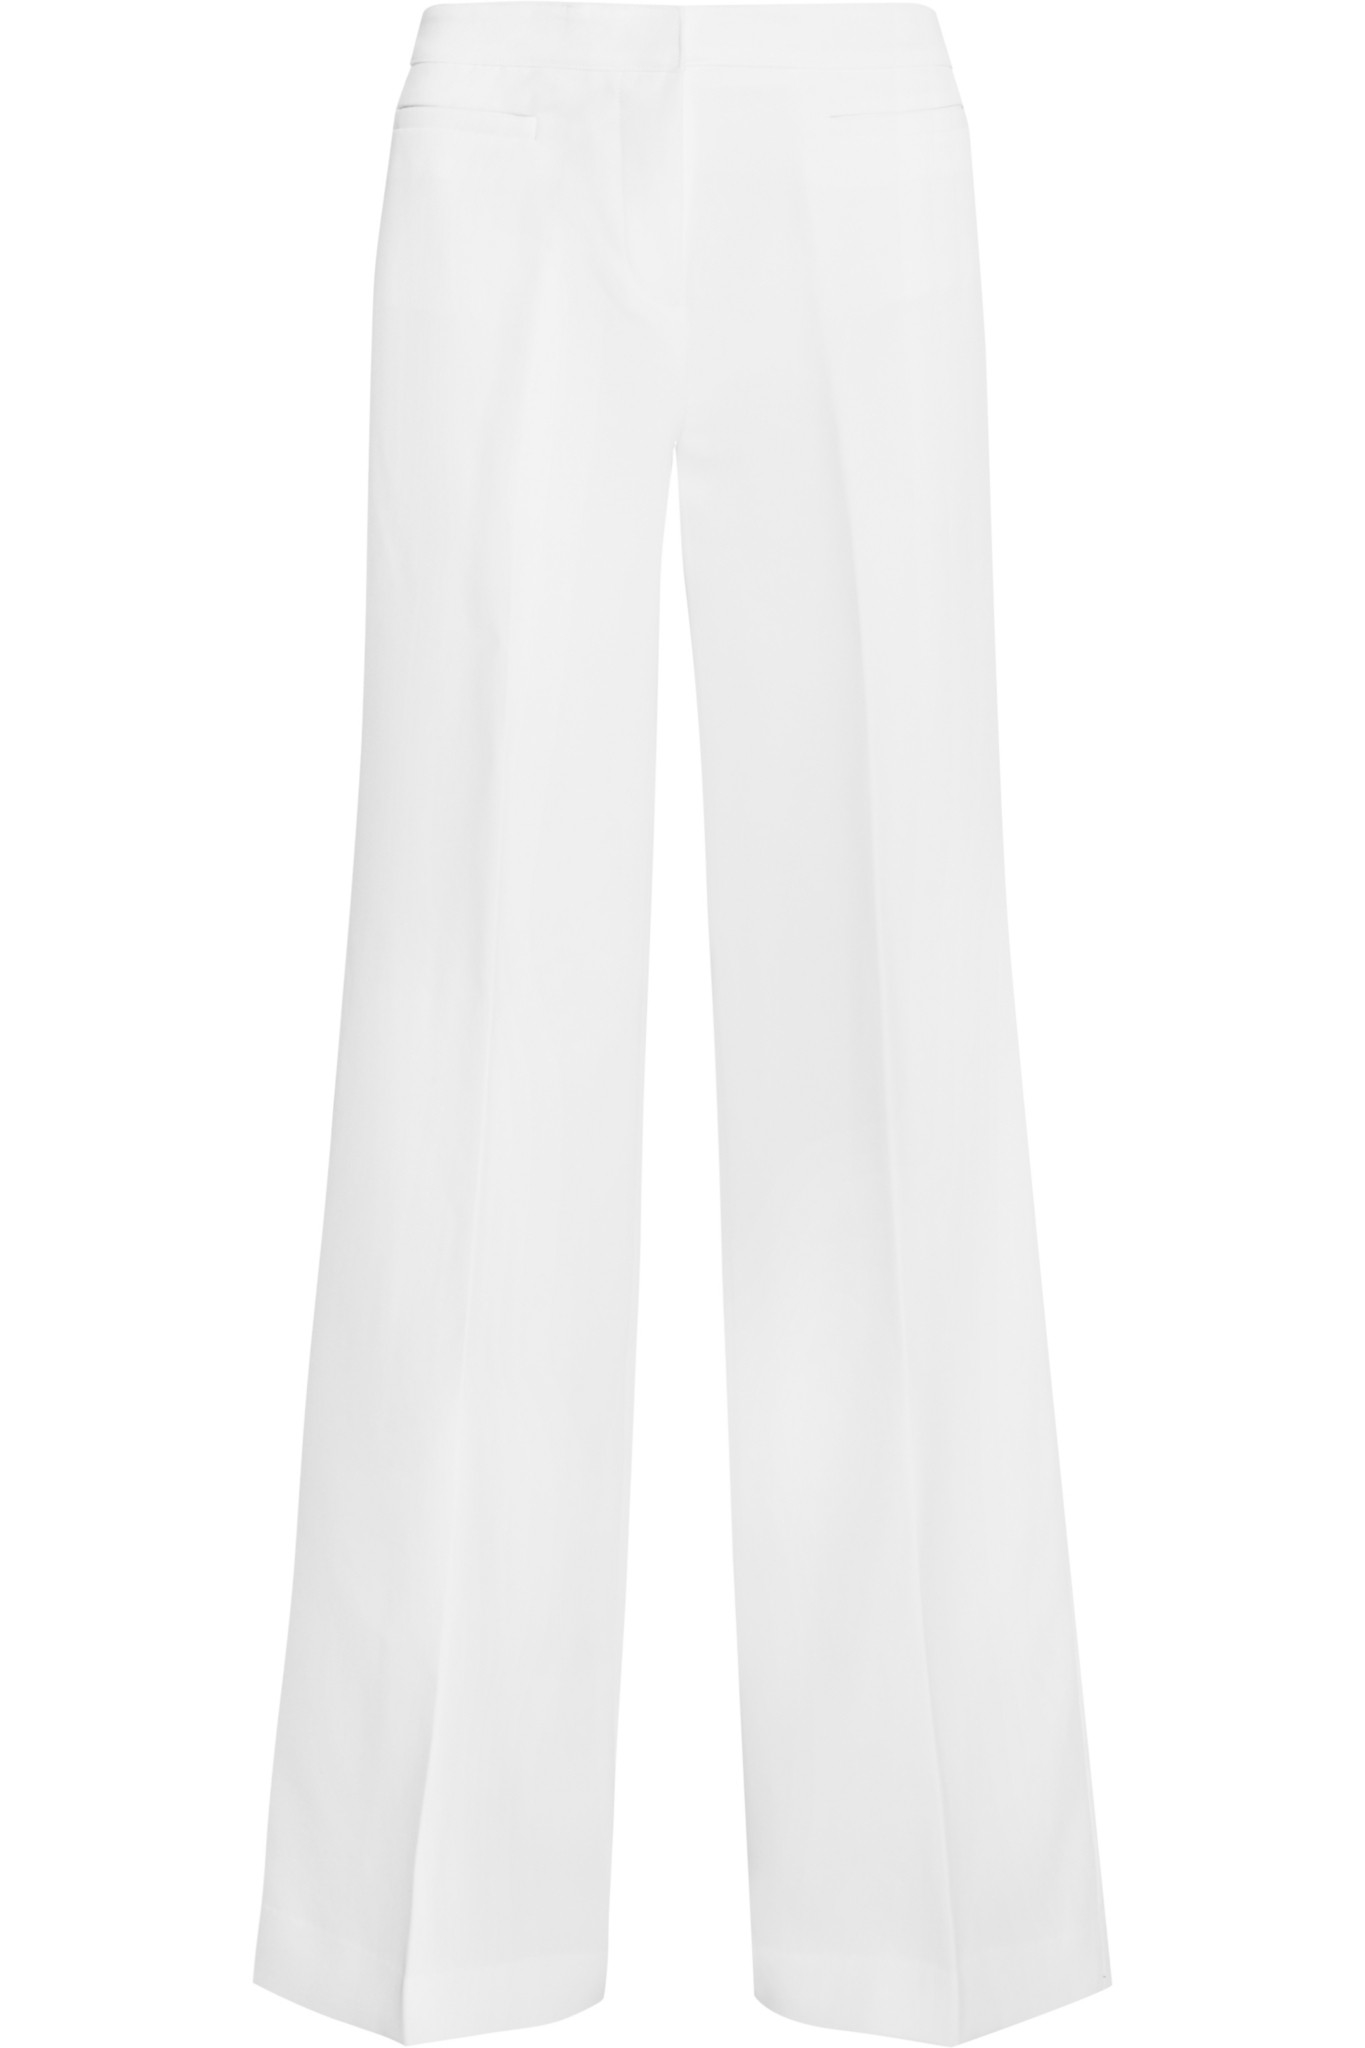 michael kors white pants